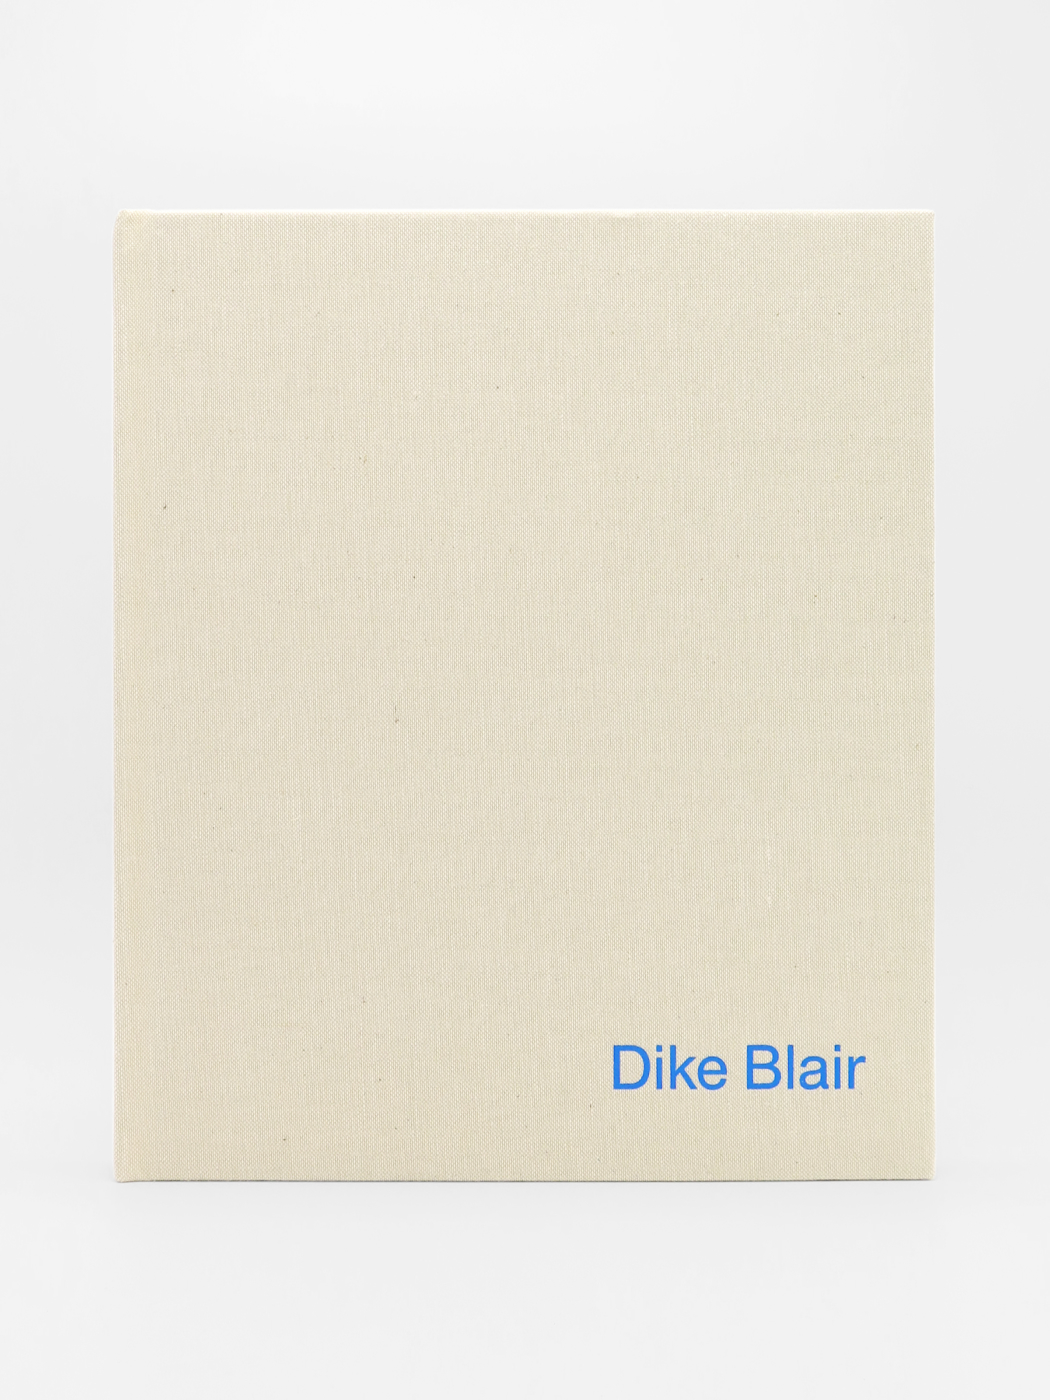 Dike Blair, Drawings Special Edition